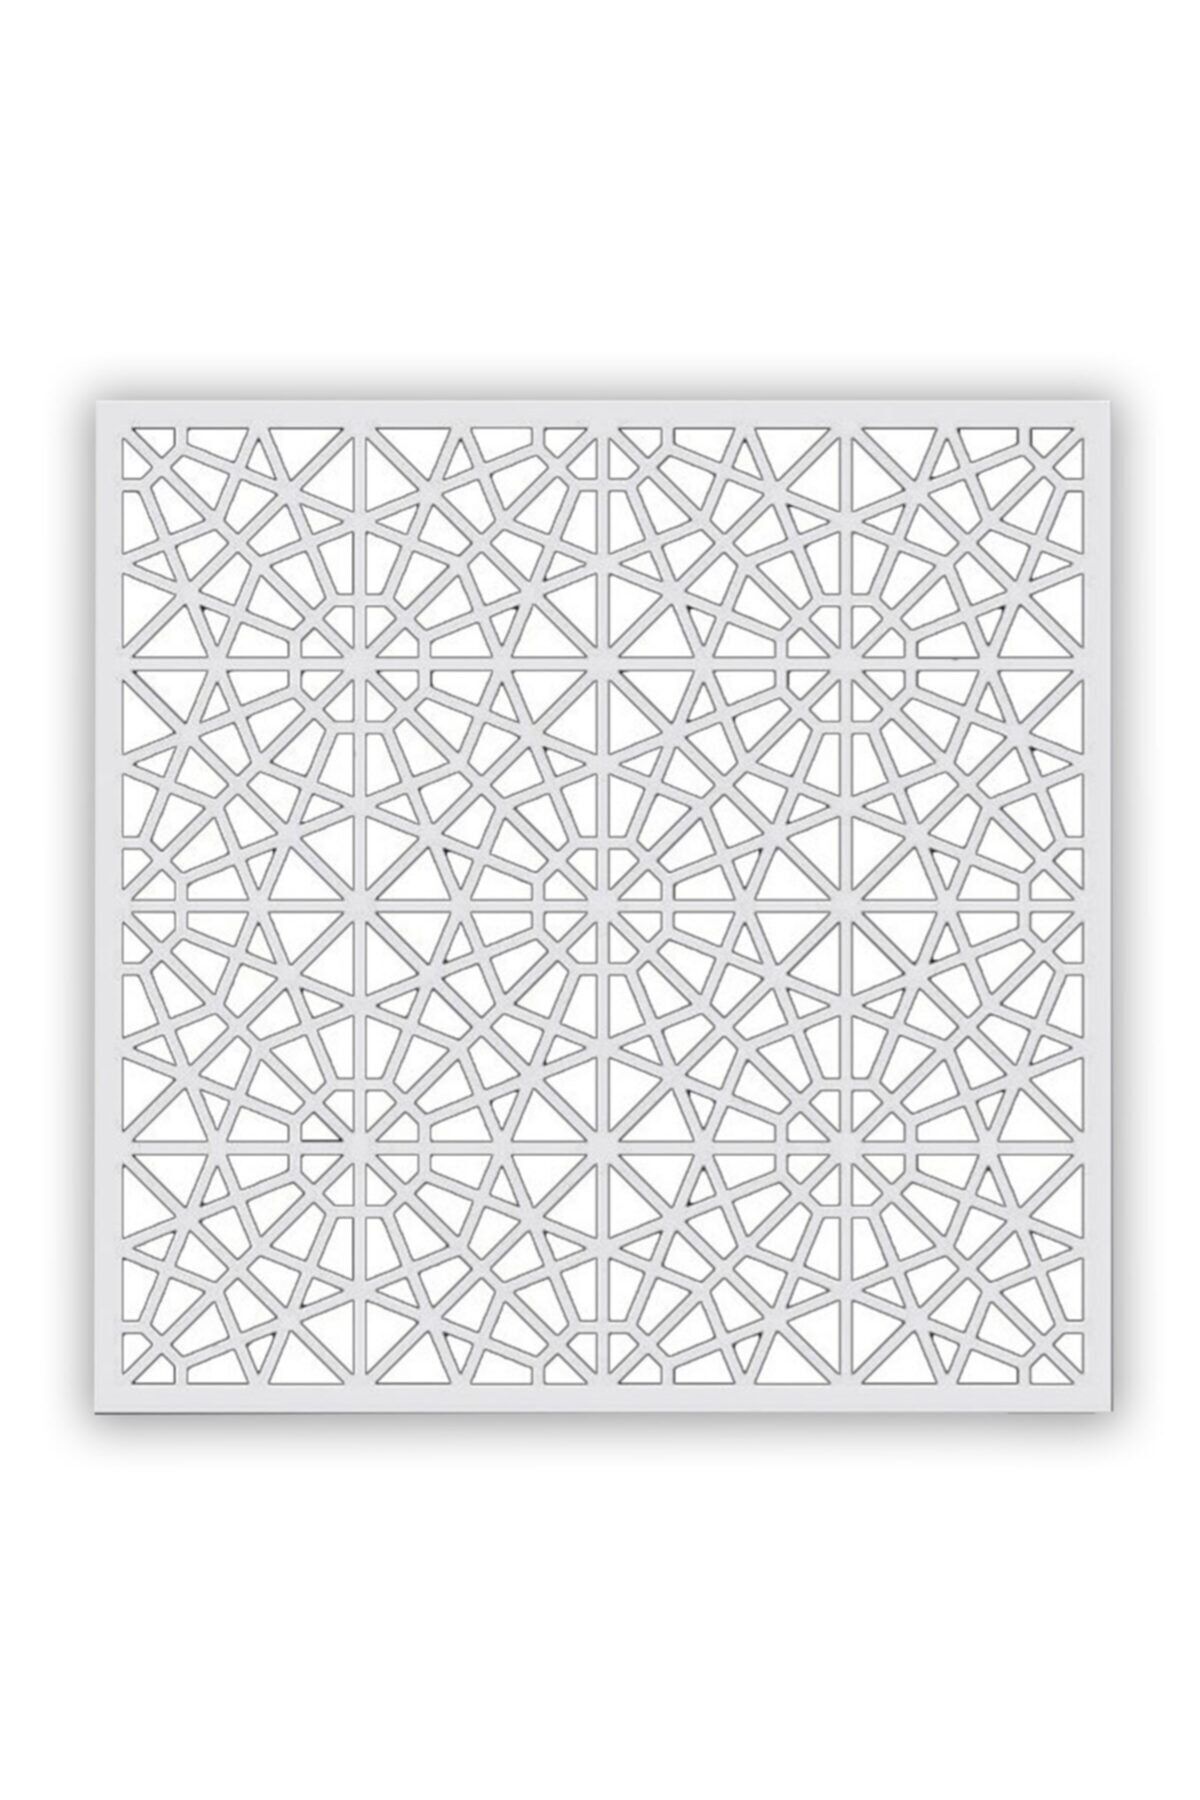 Decotime Dekoratif Tavan Kaplama Orient Beyaz Beyaz 60x60 1 Adet